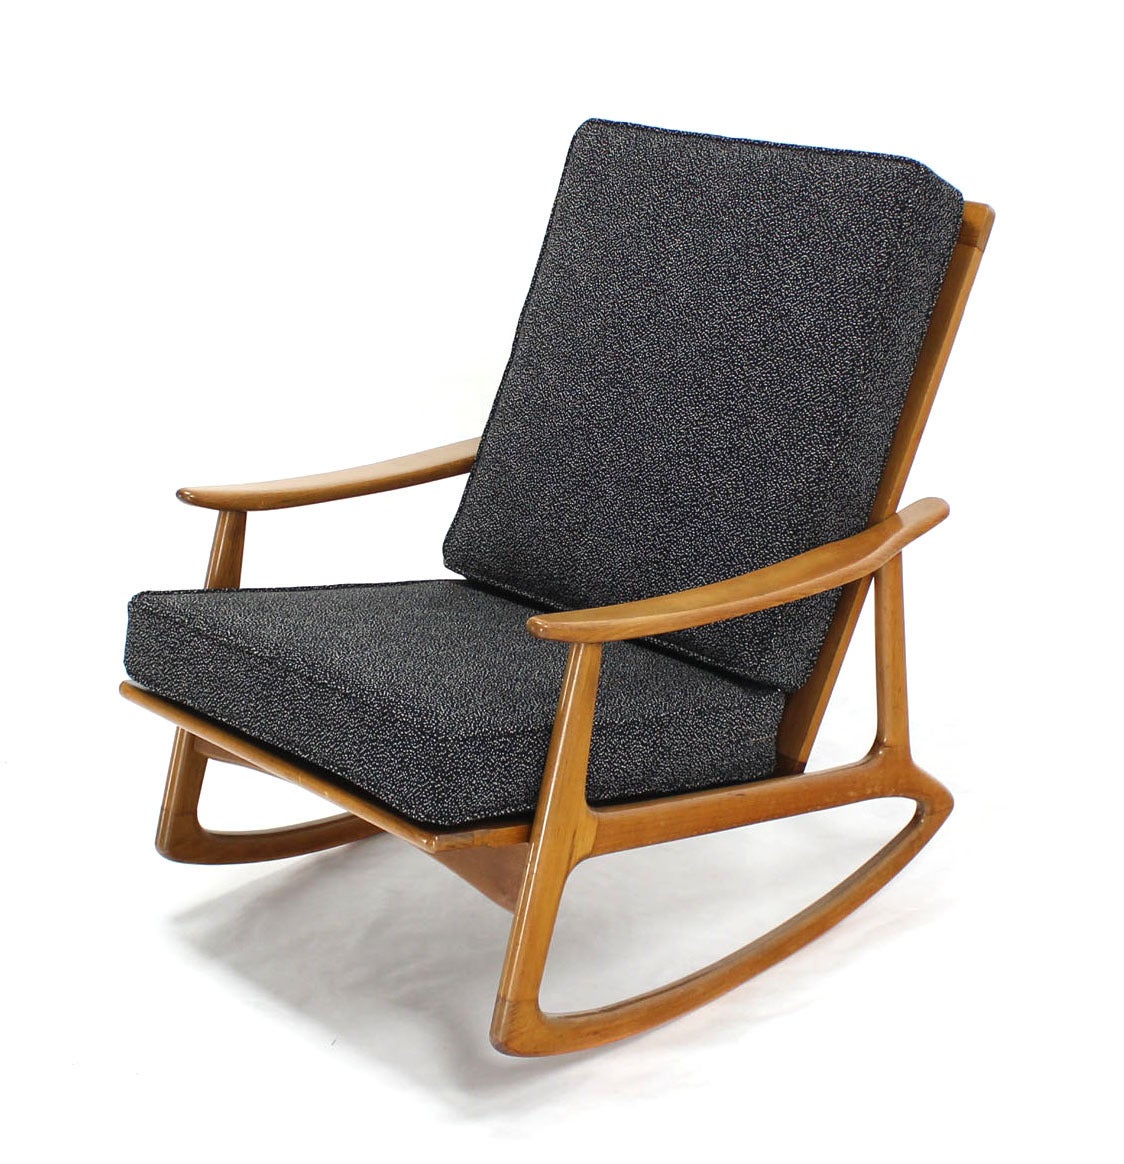 New charcoal fabric upholstery Danish Mid-Century Modern rocking lounge chair.